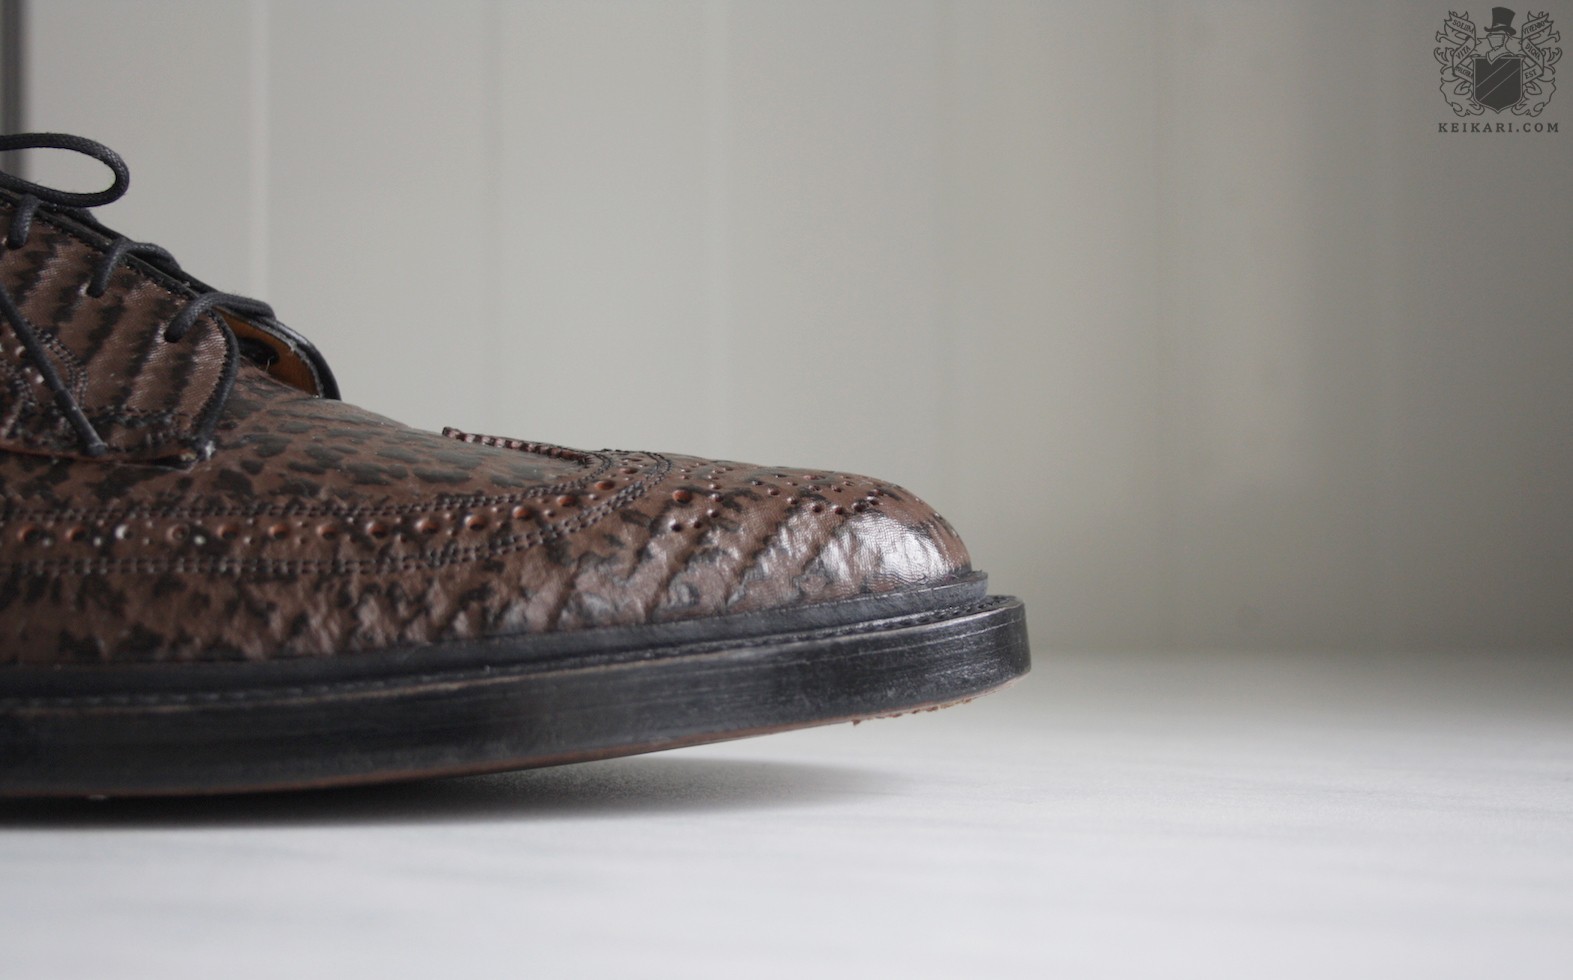 Vintage_Florsheim_sharkskin_leather_shoes_at_Keikari_dot_com08.jpg